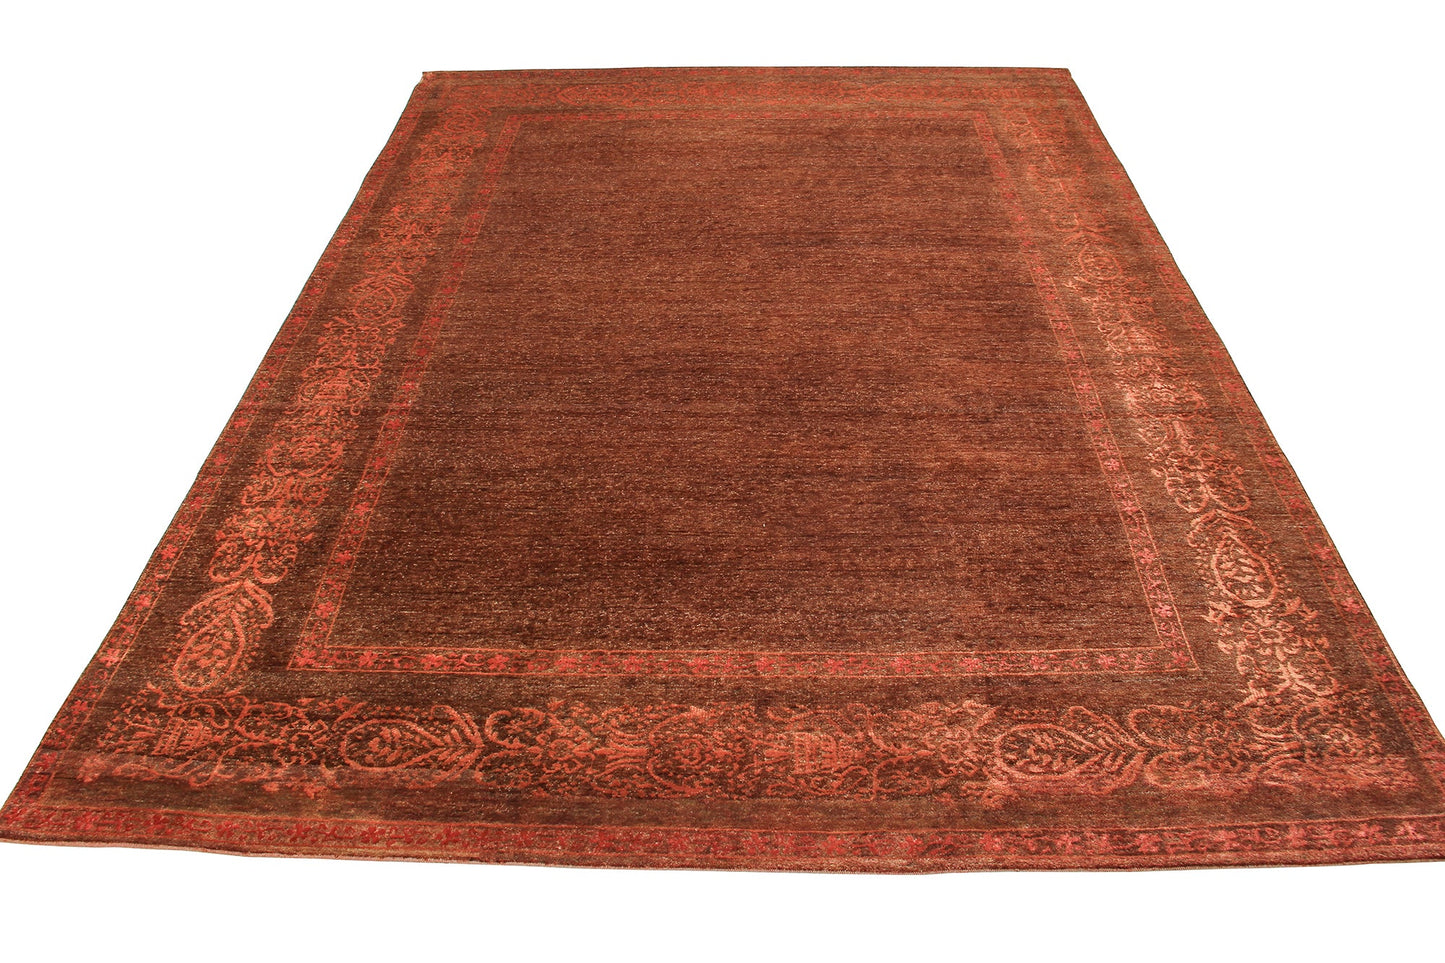 Modern Handmade Indian Carpet product image #27556211687594